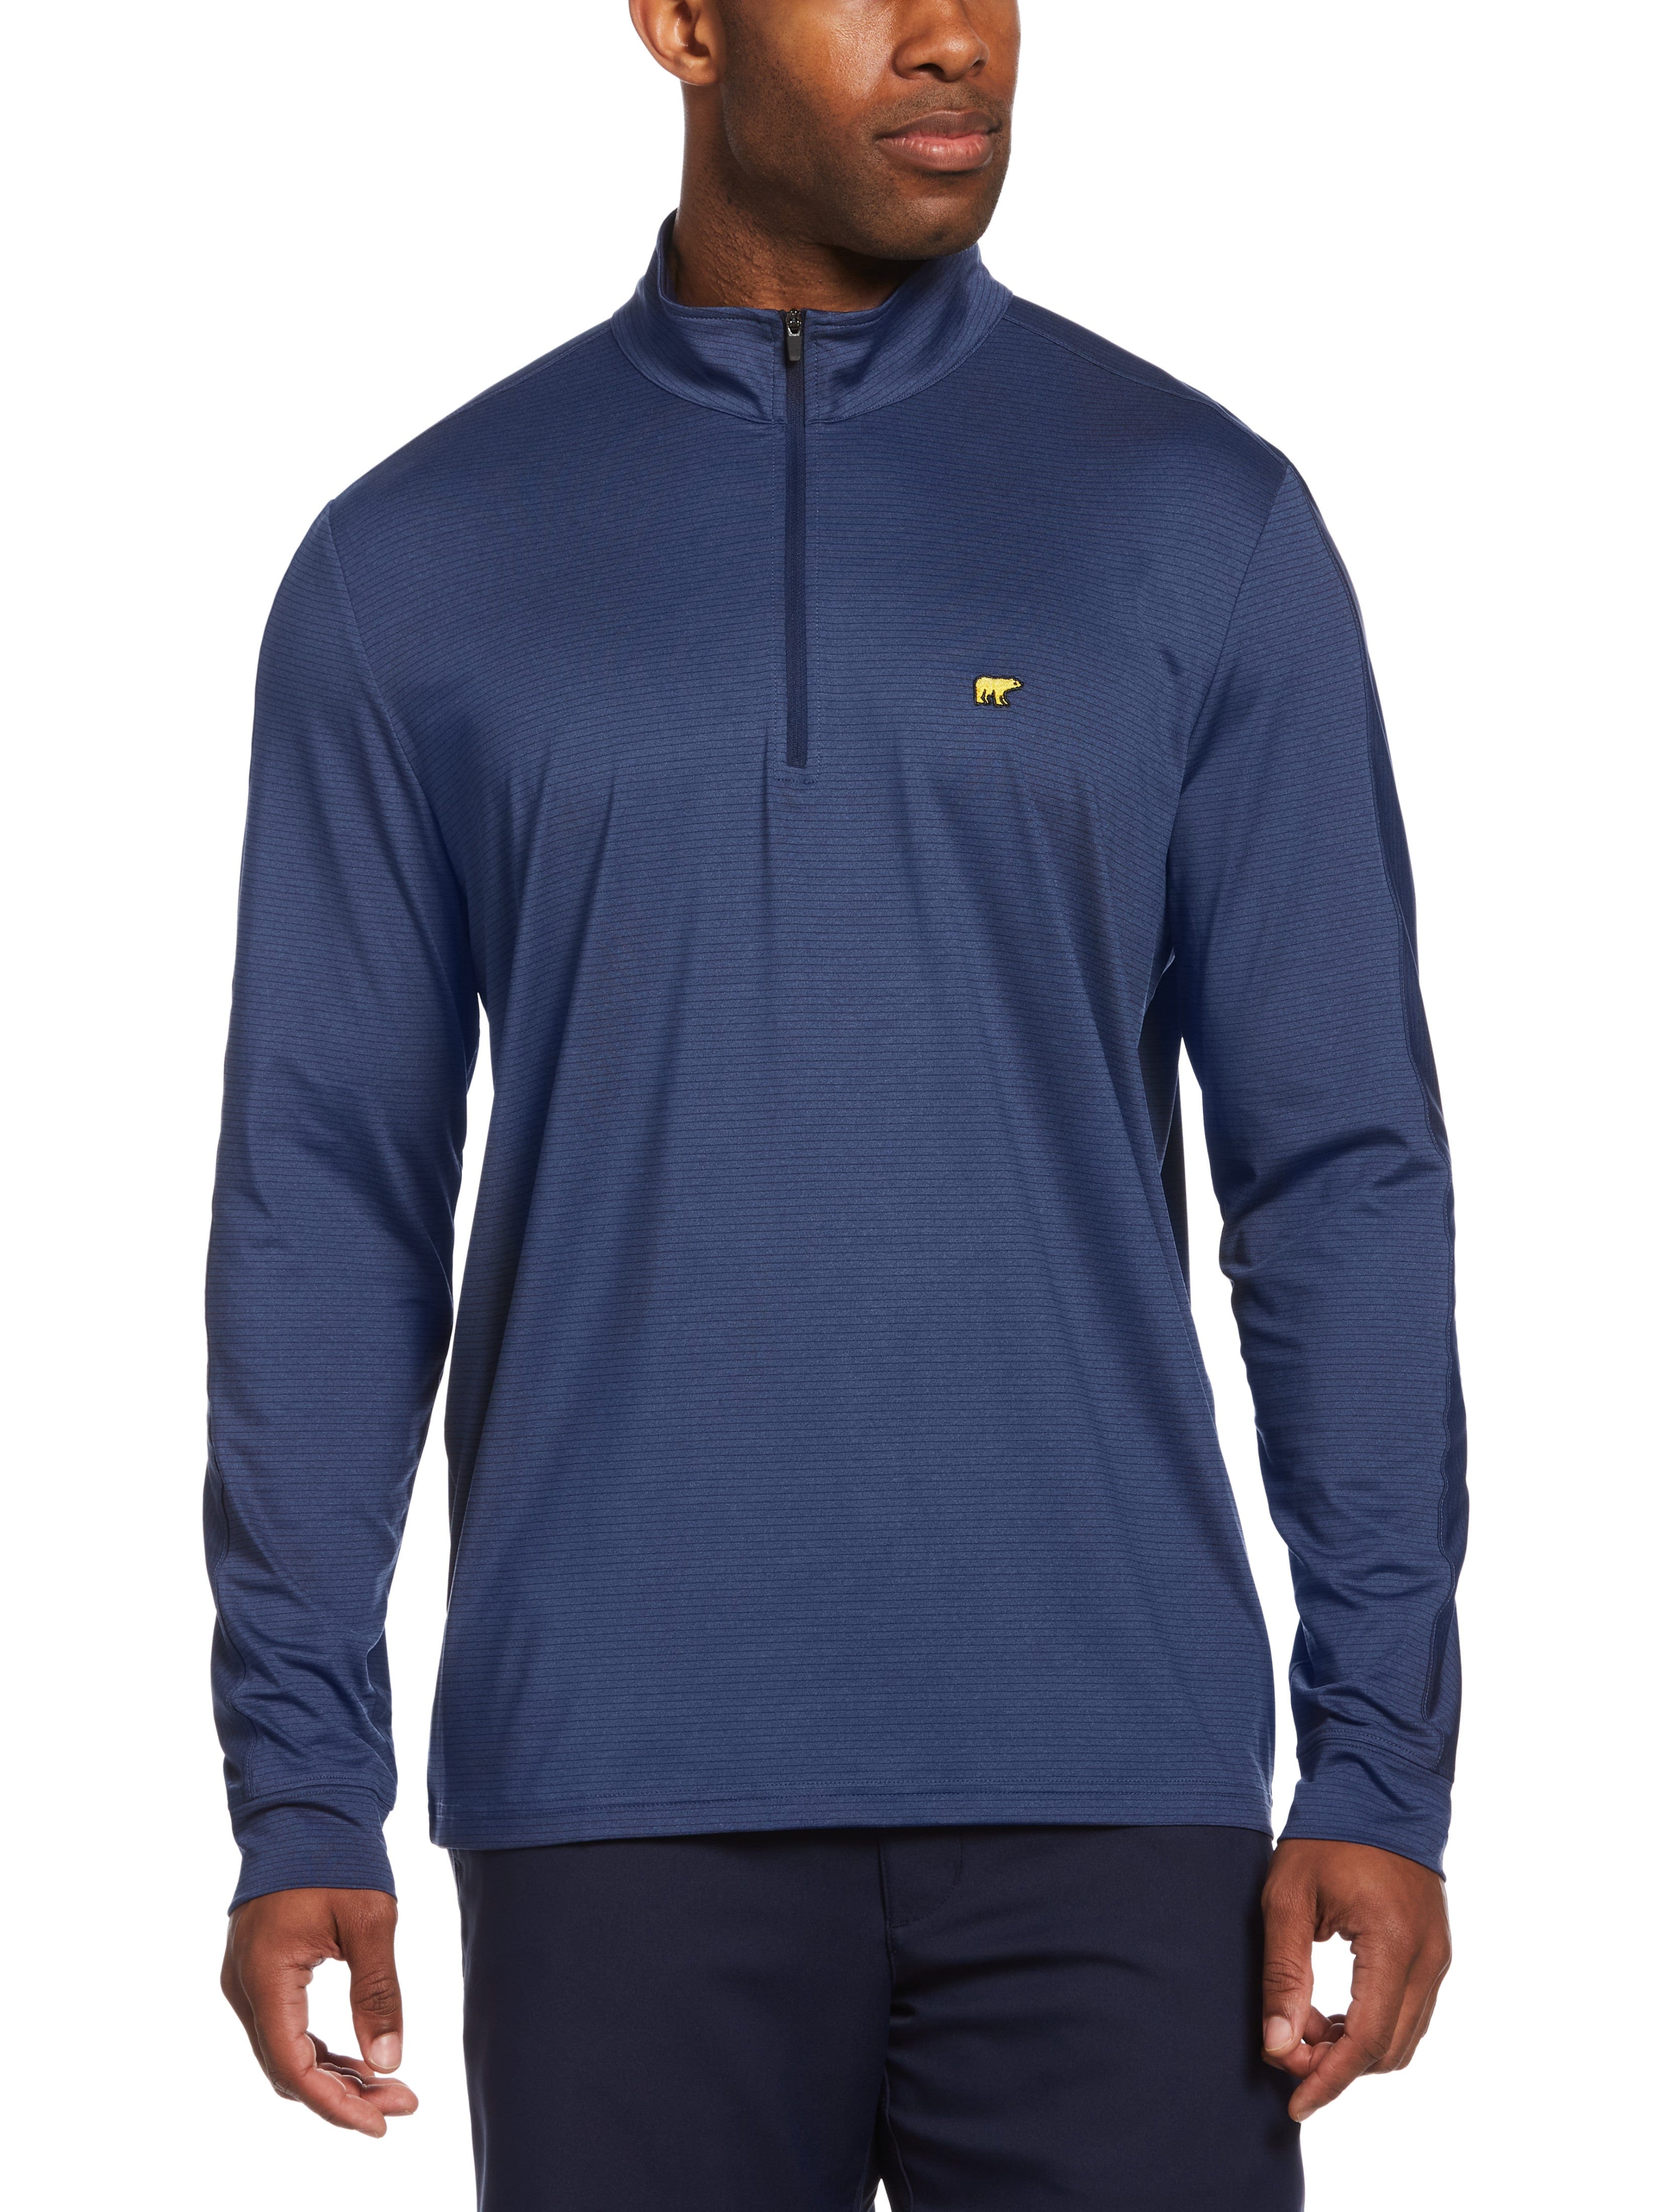 Jack Nicklaus Mens 1/4 Zip Sun Shade Base Layer Golf Shirt, Size Large, Peacoat Heather Brown, Polyester/Elastane | Golf Apparel Shop